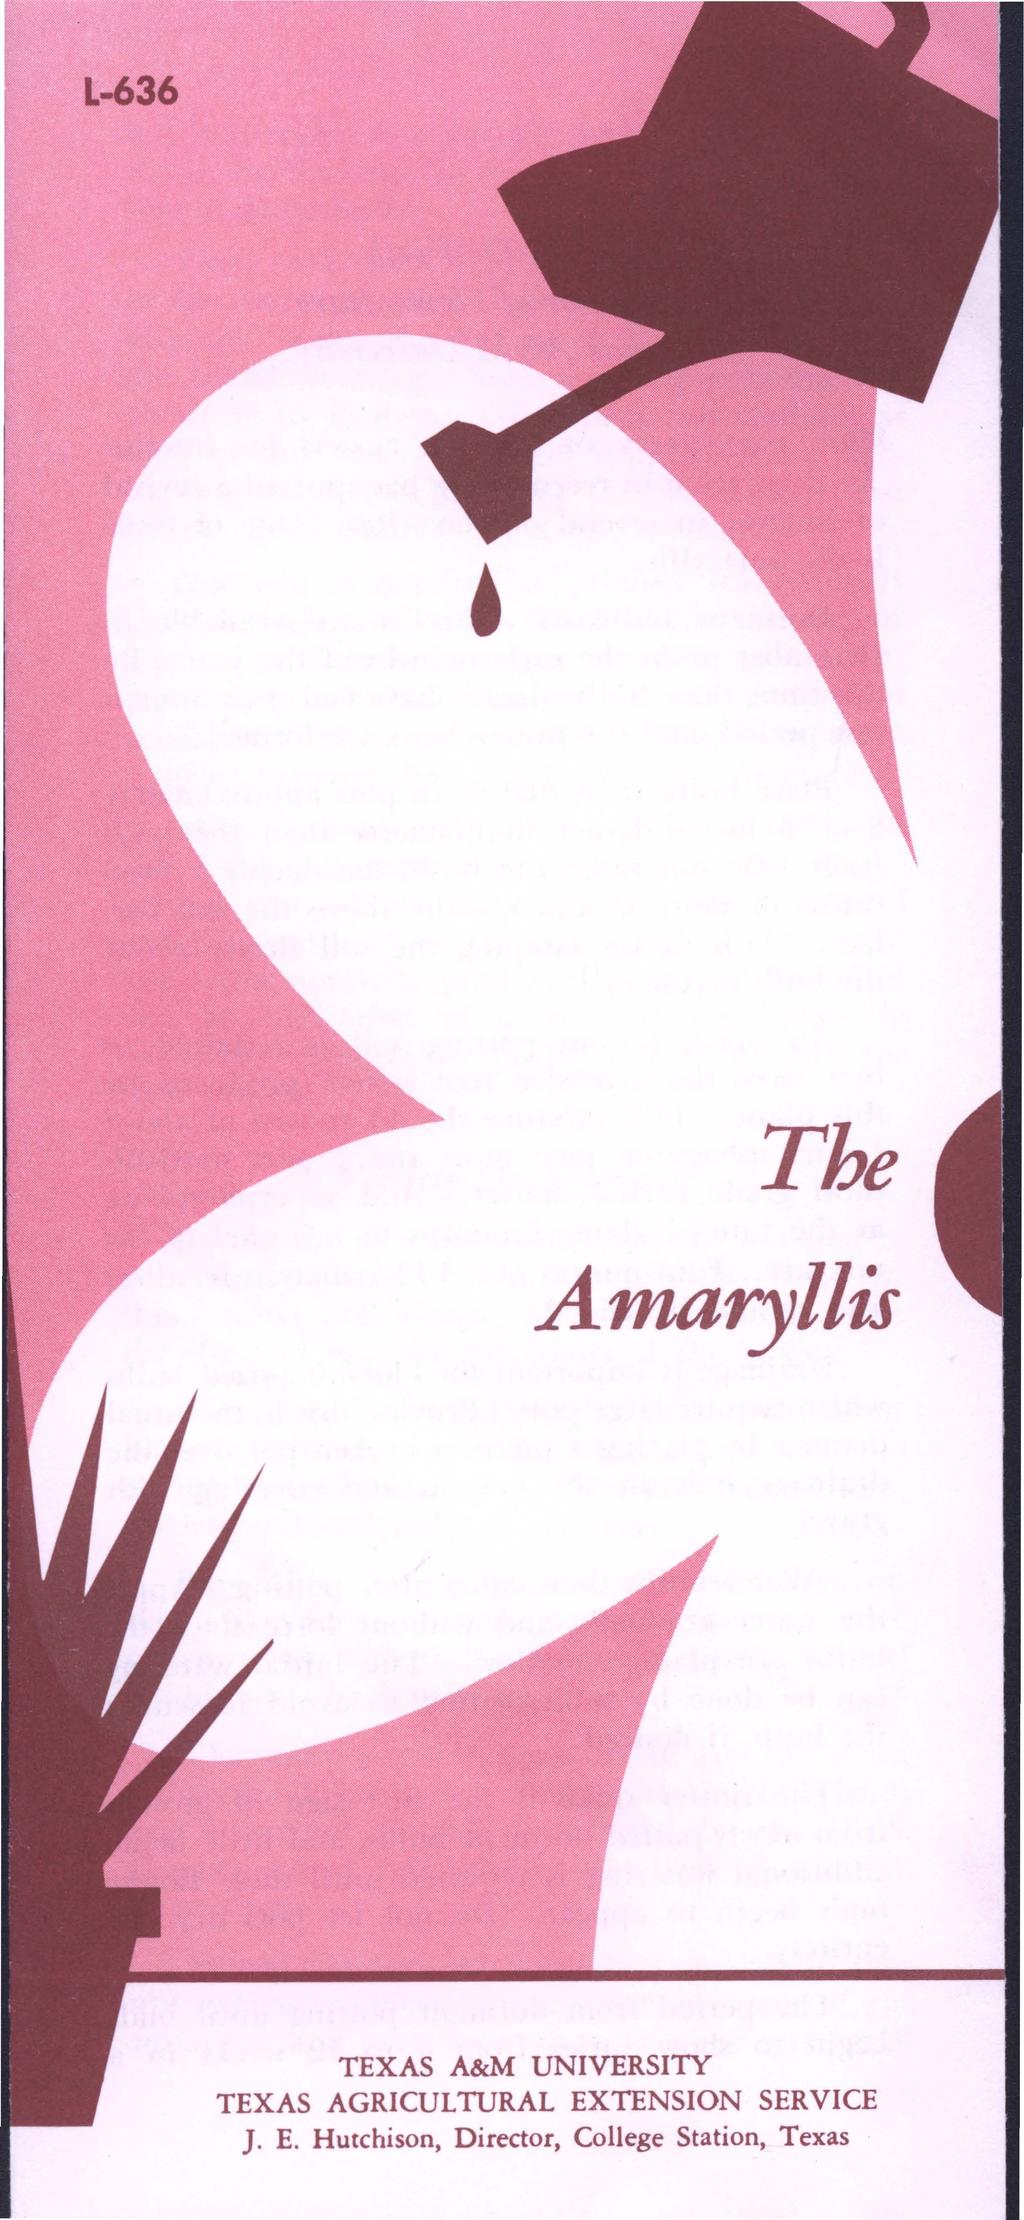 -636 The Amaryllis TEXAS A&M UNIVERSITY TEXAS AGRICULTURAL